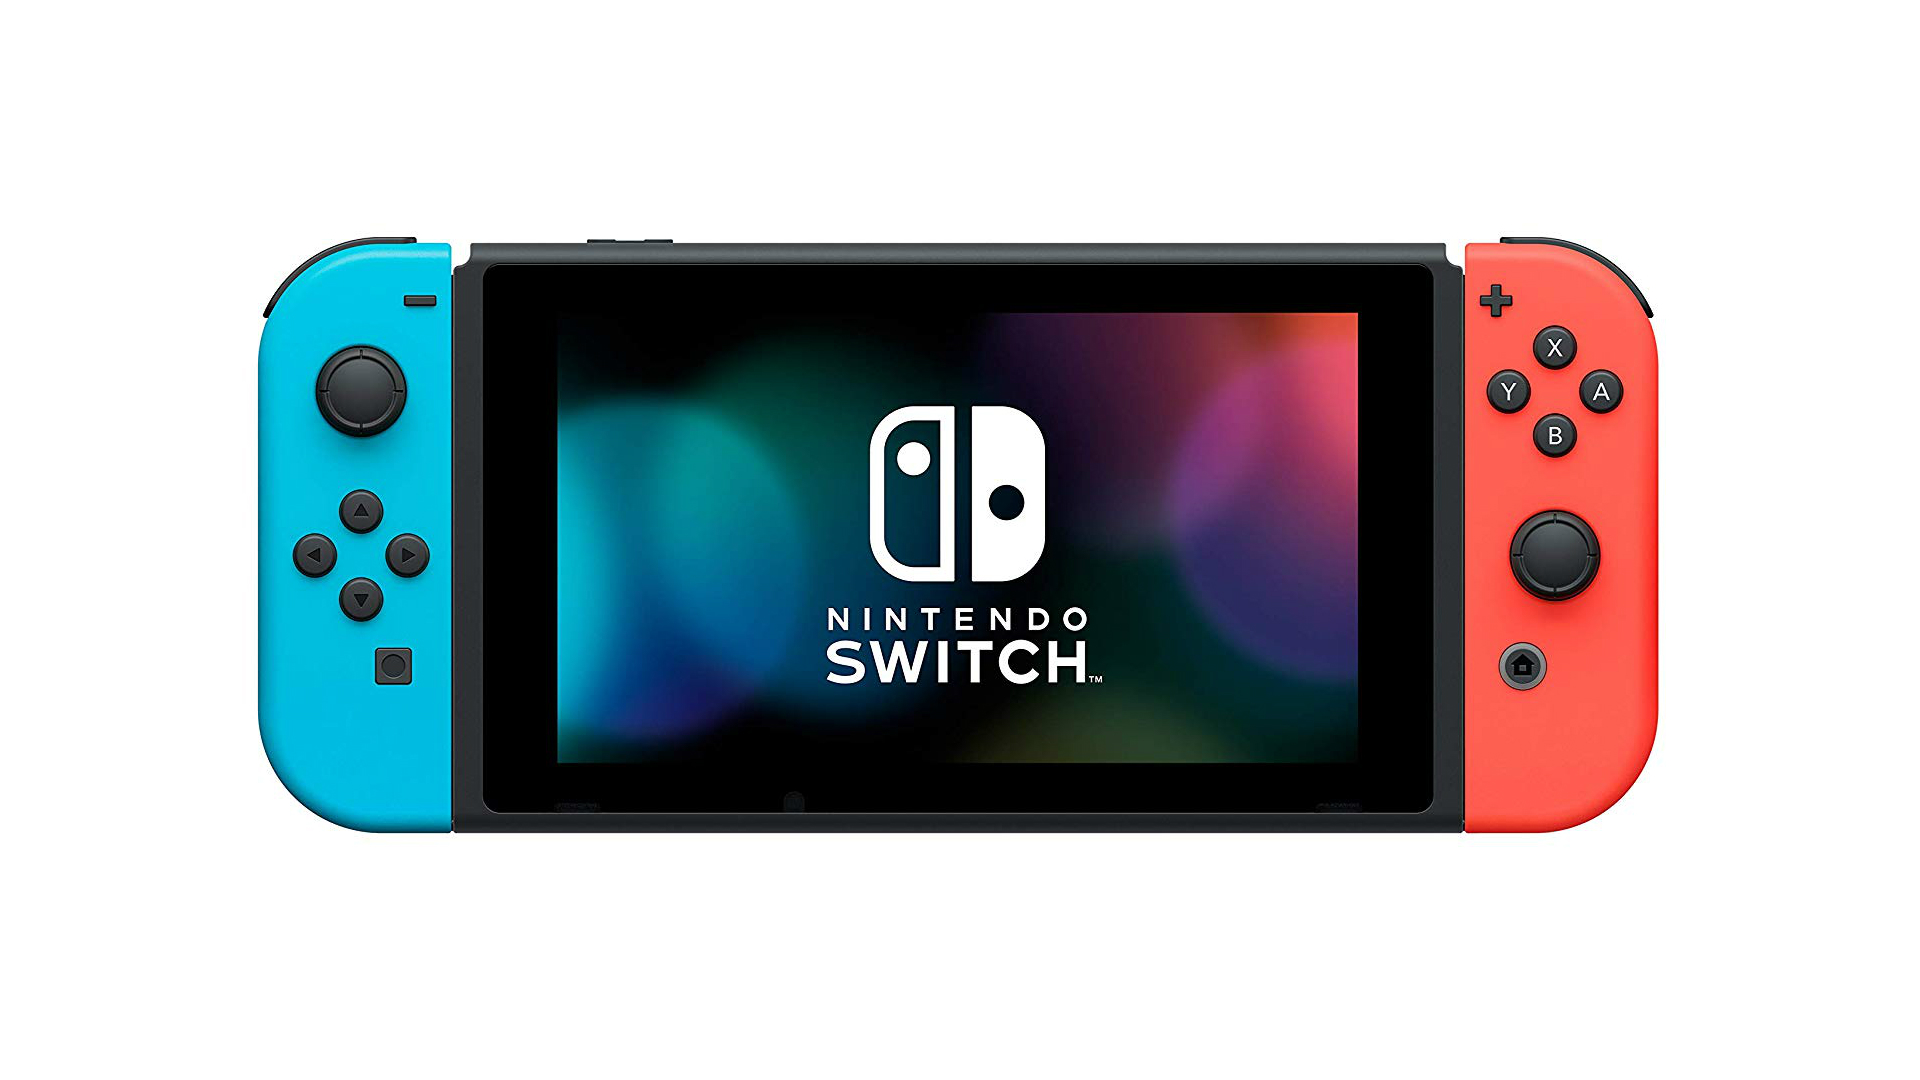 Nintendo Switch press render